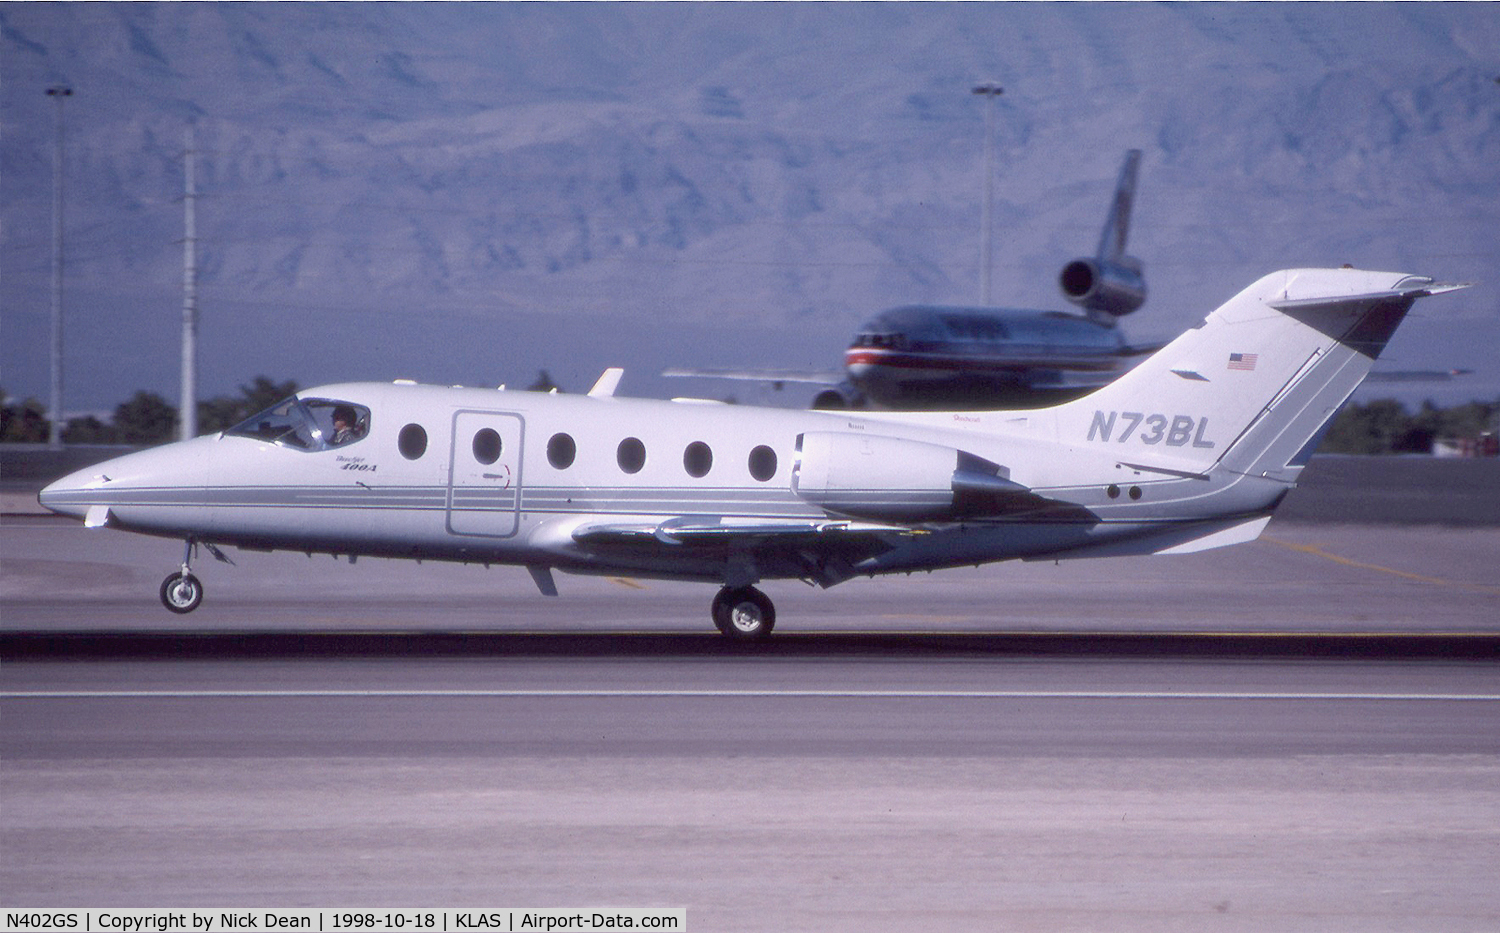 N402GS, 1993 Beech 400A Beechjet C/N RK-71, KLAS (RK-71 Seen here carrying N73BL and currently registered as posted N402GS)